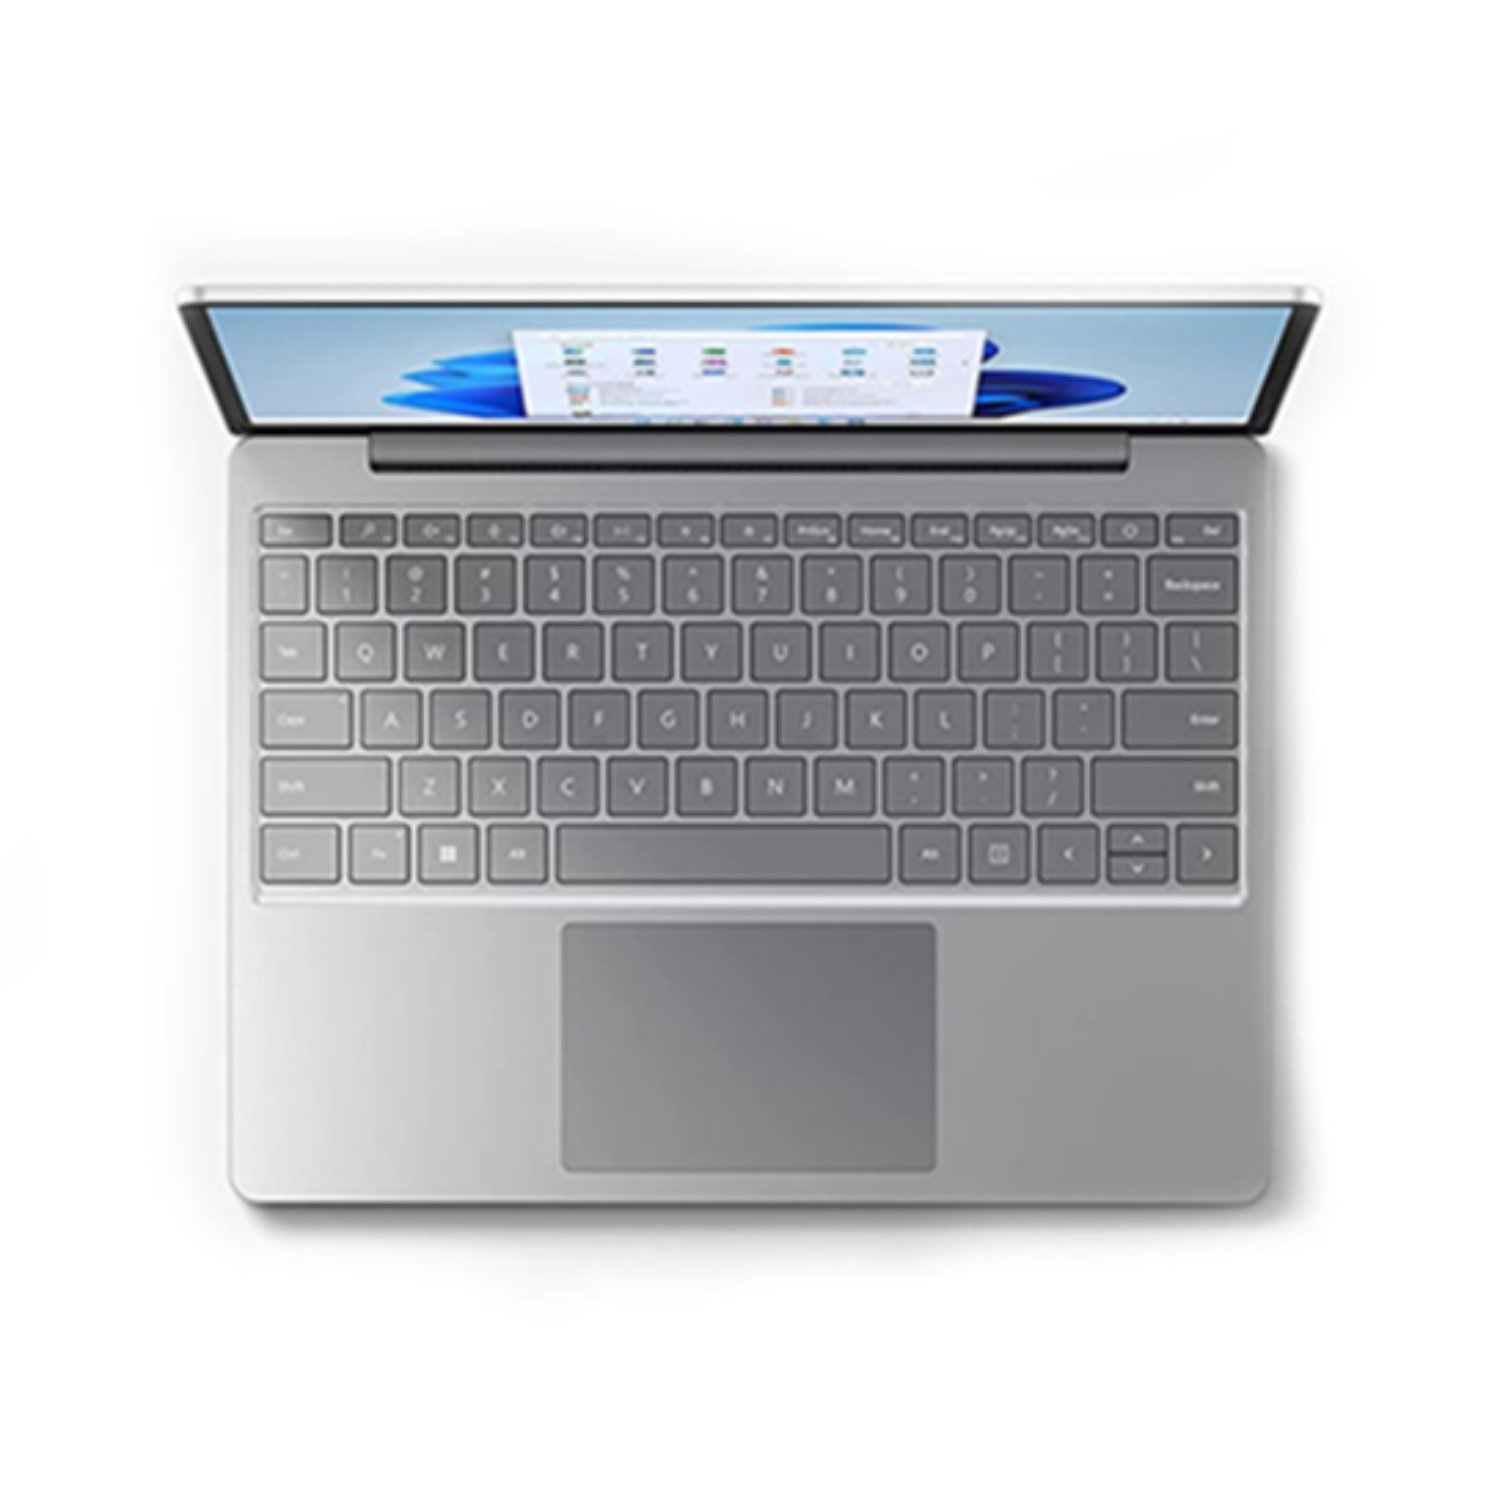 سرفیس لپ تاپ گو 2 مایکروسافت 12 اینچ  Core i5-4G-256G  